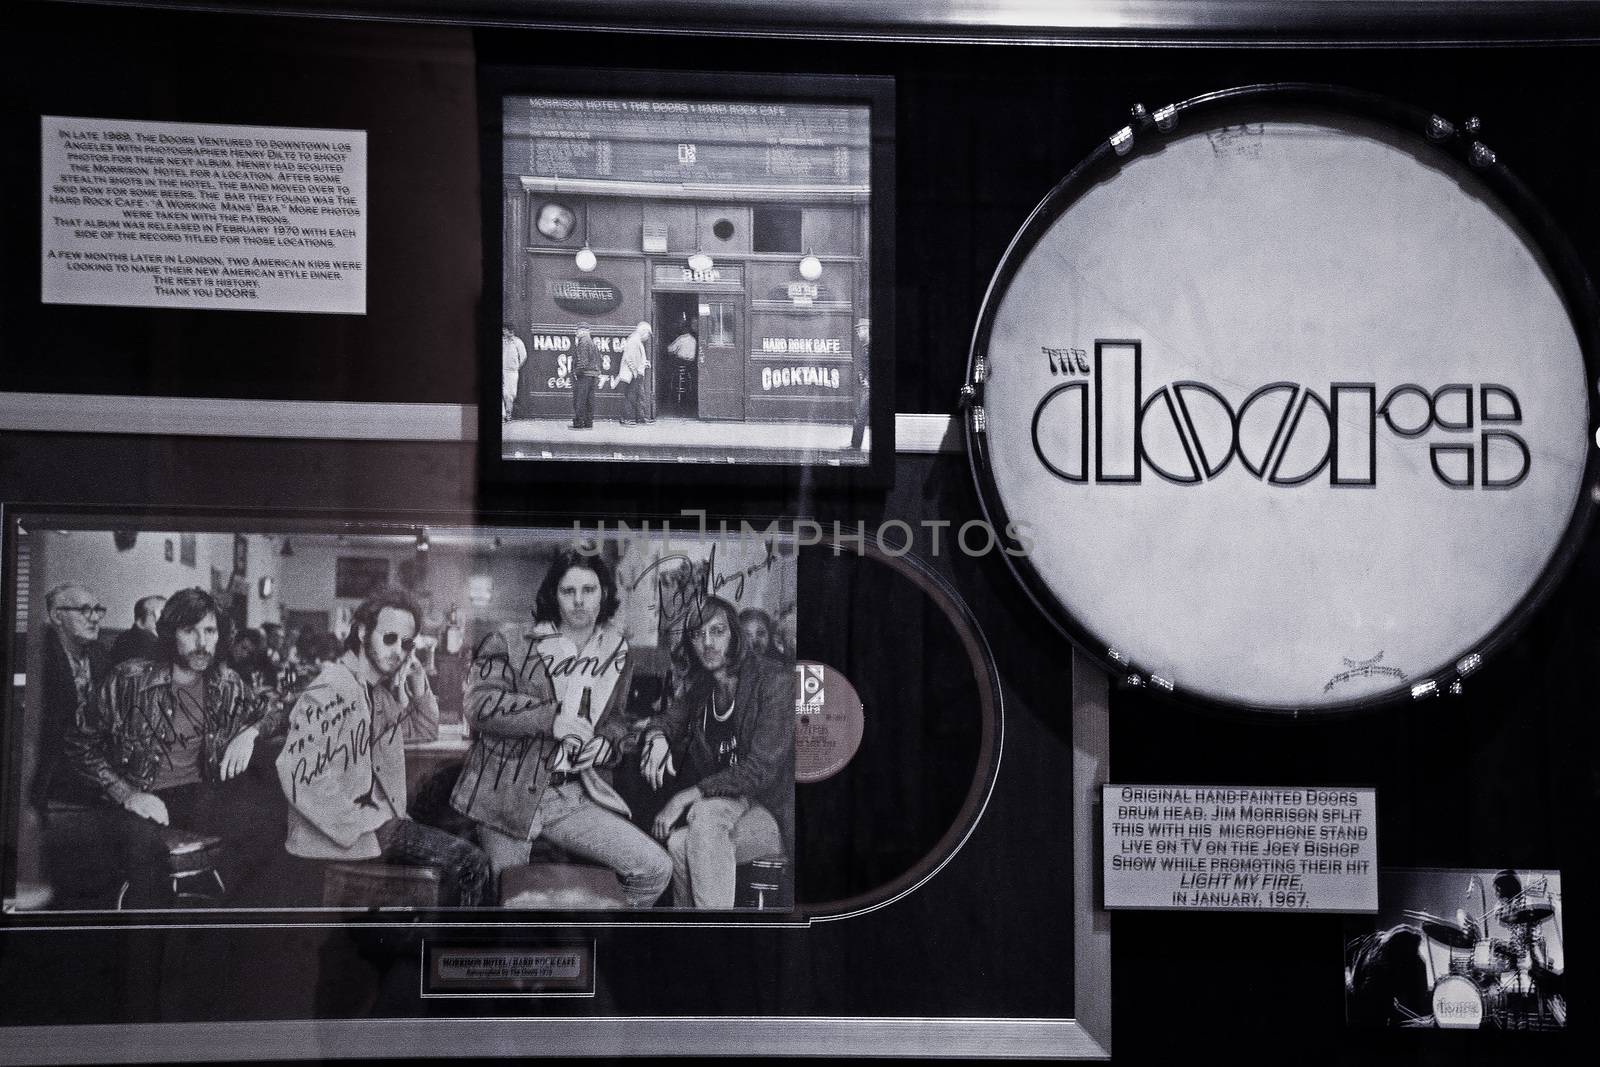 Las Vegas,NV/USA - 31 Oct,2014 : Music Memories Behind The Glass at Hard Rock Hotel Las Vegas.Display of original hand painted the Doors drum head. by USA-TARO